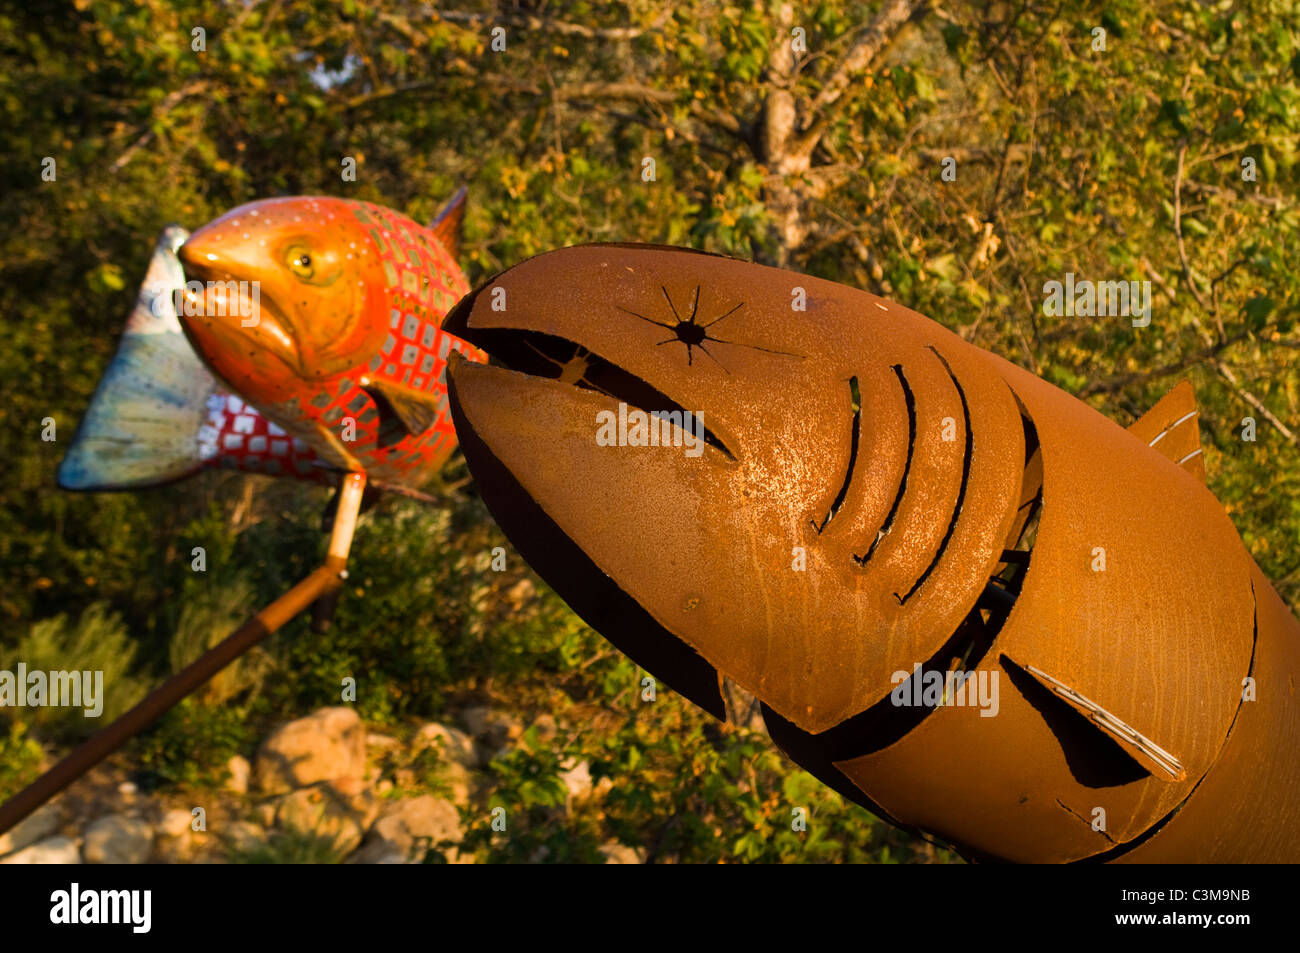 Metal art sculptures of native american motif salmon El Capitan Canyon Resort, near Santa Barbara, California Stock Photo